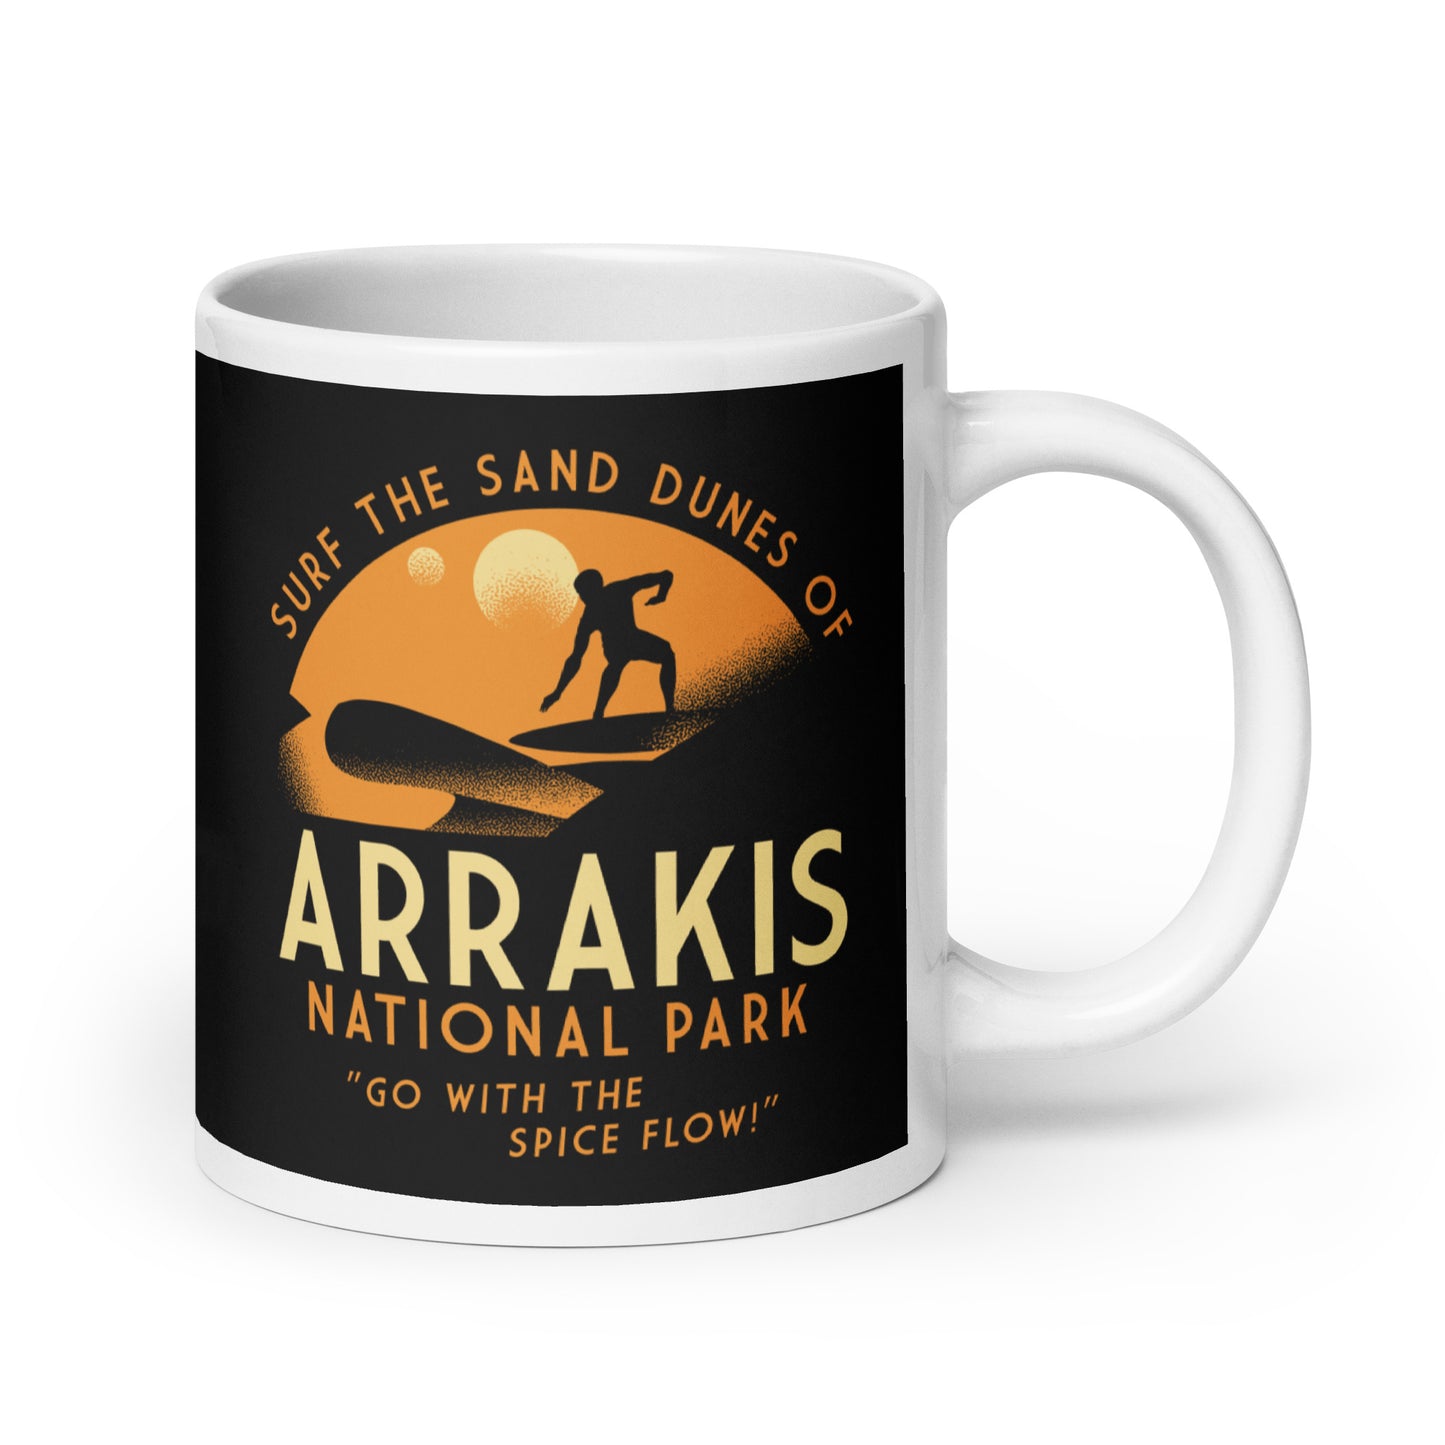 Arrakis National Park Mug